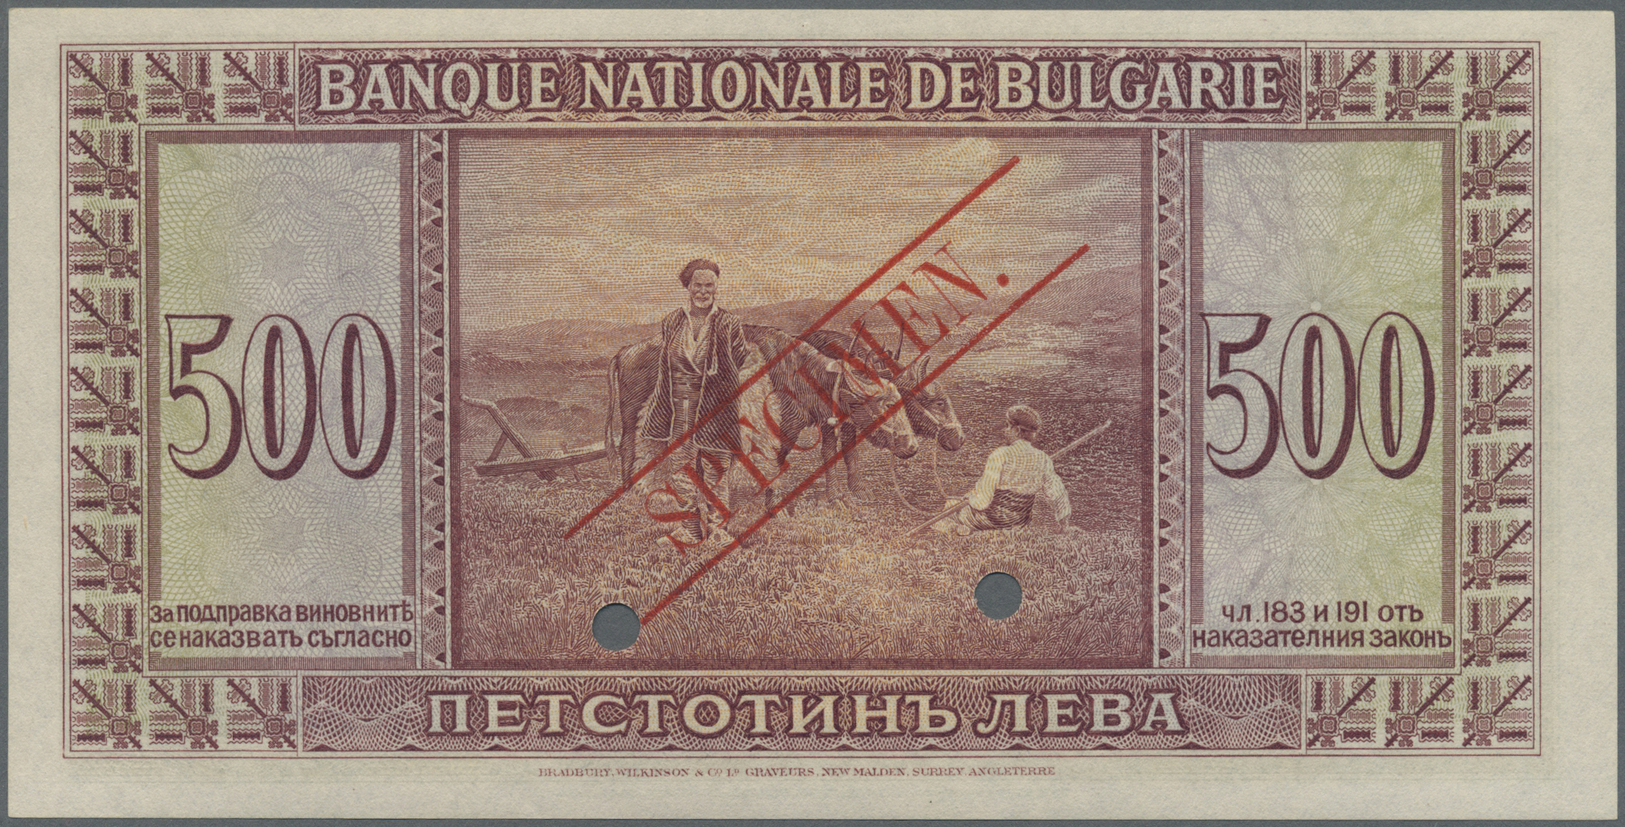 00397 Bulgaria / Bulgarien: 500 Leva 1925 SPECIMEN, P.47s With A Very Soft Diagonal Bend At Left Center, Otherwise Perfe - Bulgaria